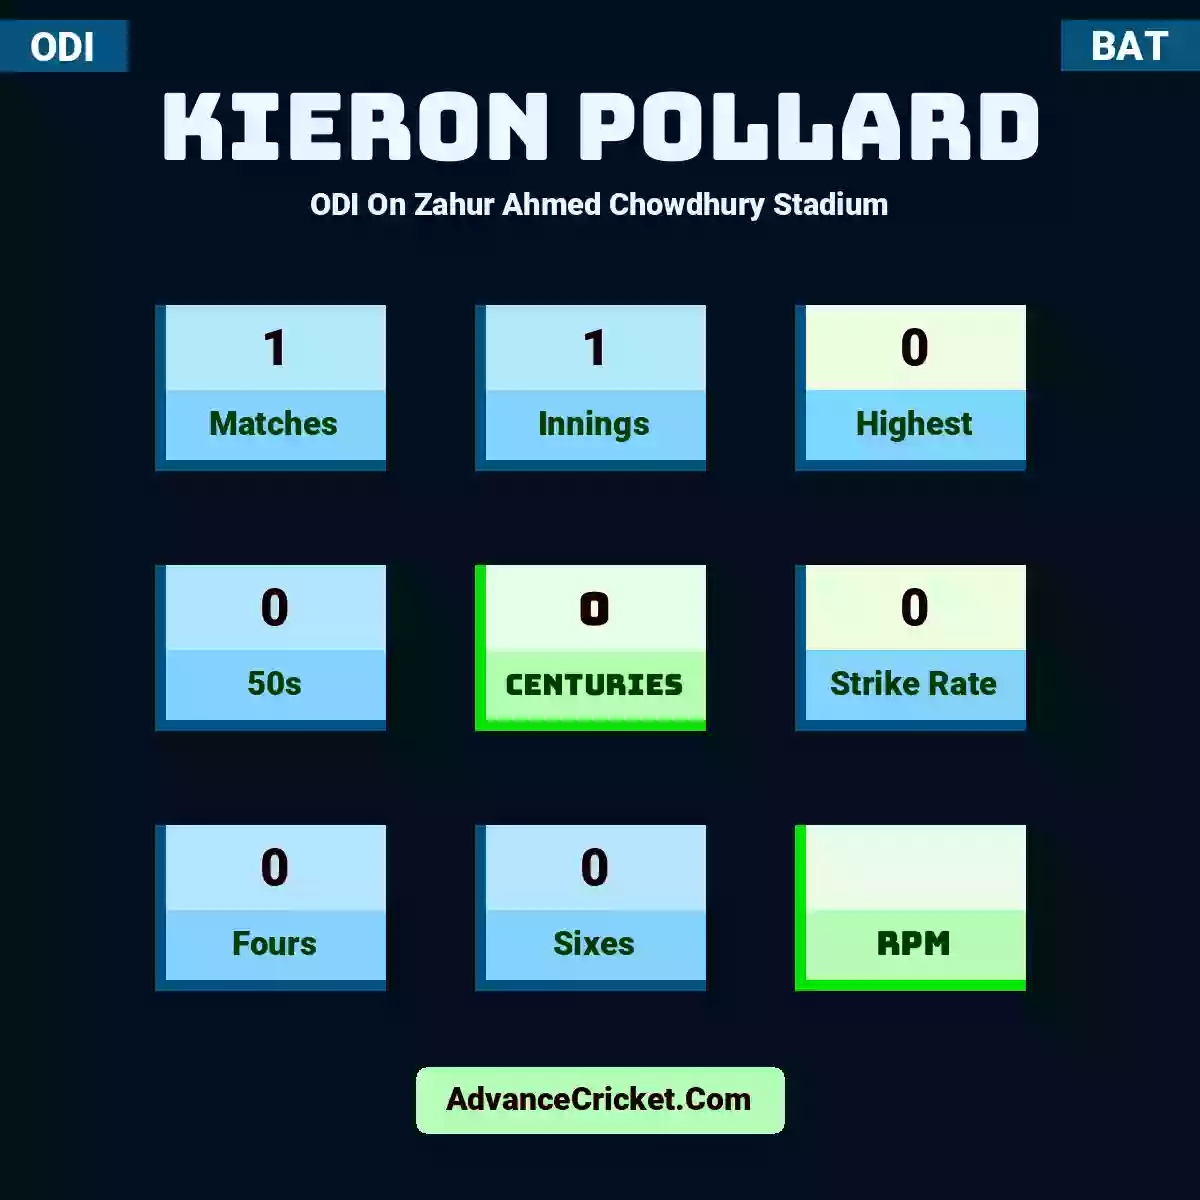 Kieron Pollard ODI  On Zahur Ahmed Chowdhury Stadium, Kieron Pollard played 1 matches, scored 0 runs as highest, 0 half-centuries, and 0 centuries, with a strike rate of 0. K.Pollard hit 0 fours and 0 sixes.